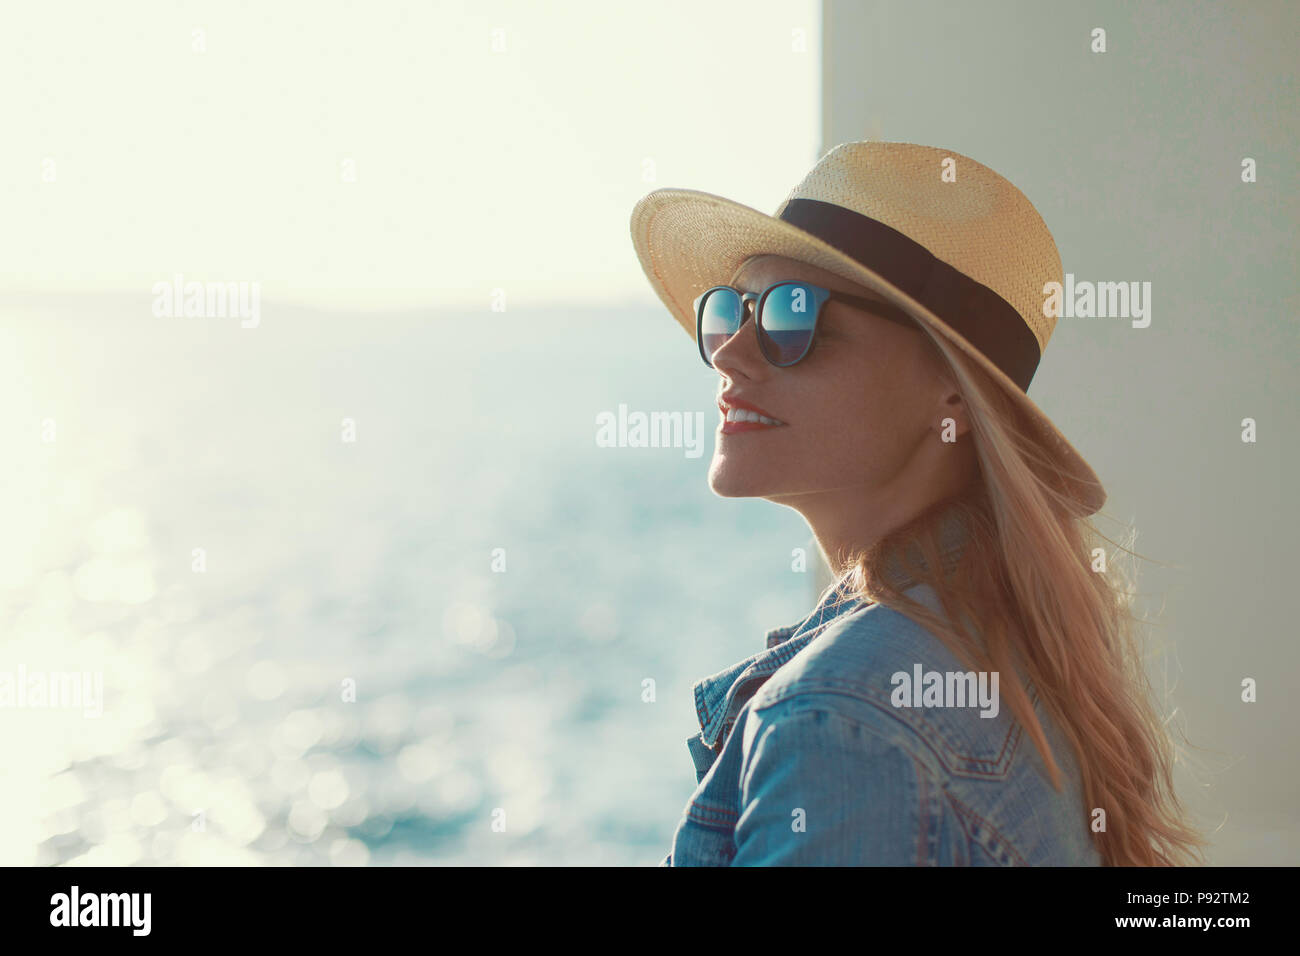 Meilleur jeune blonde woman portrait in hat on cruise ship, looking away Banque D'Images